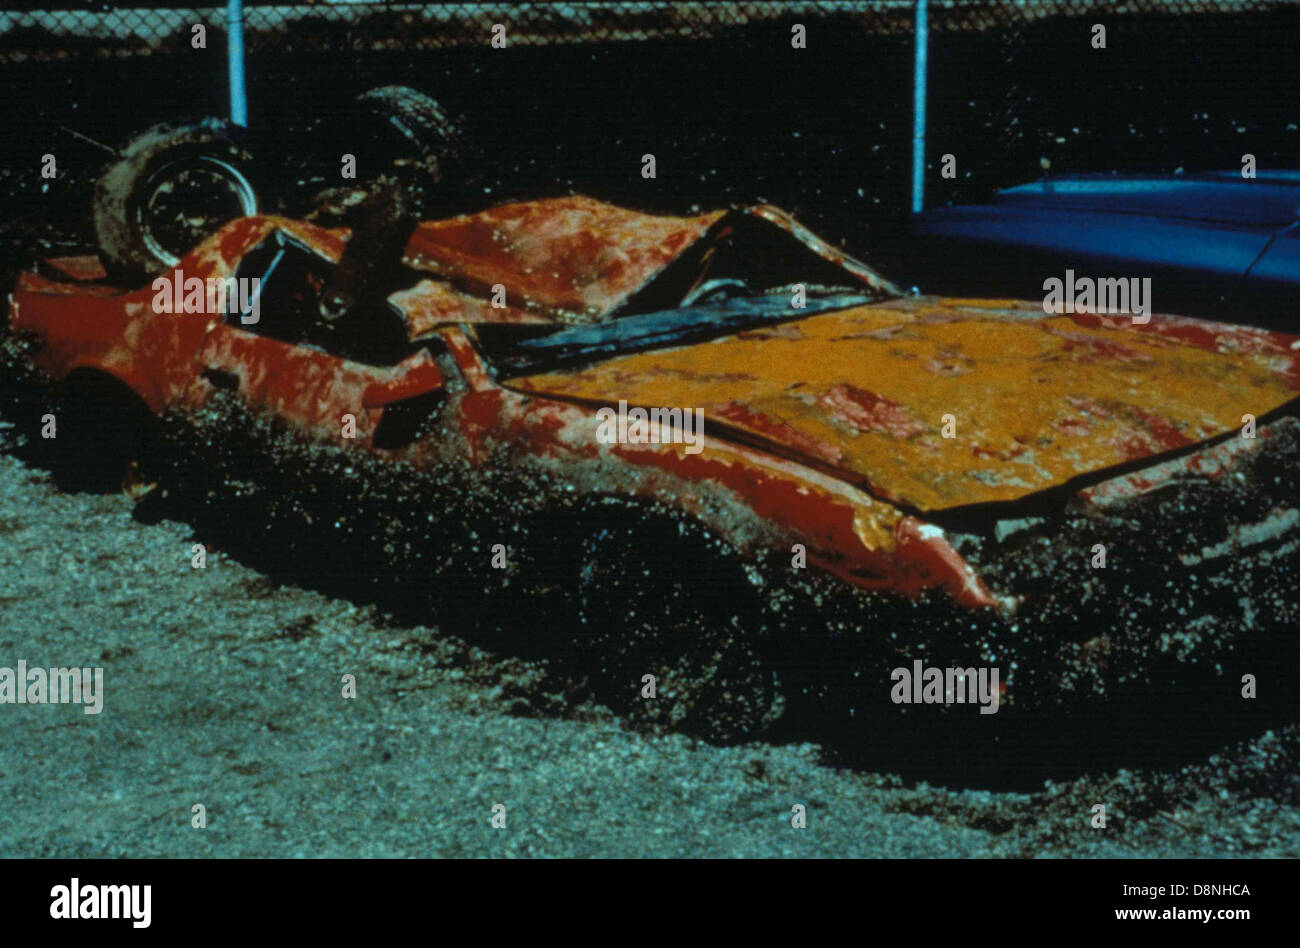 Zebra mussels encrust a damaged orange car. Stock Photo